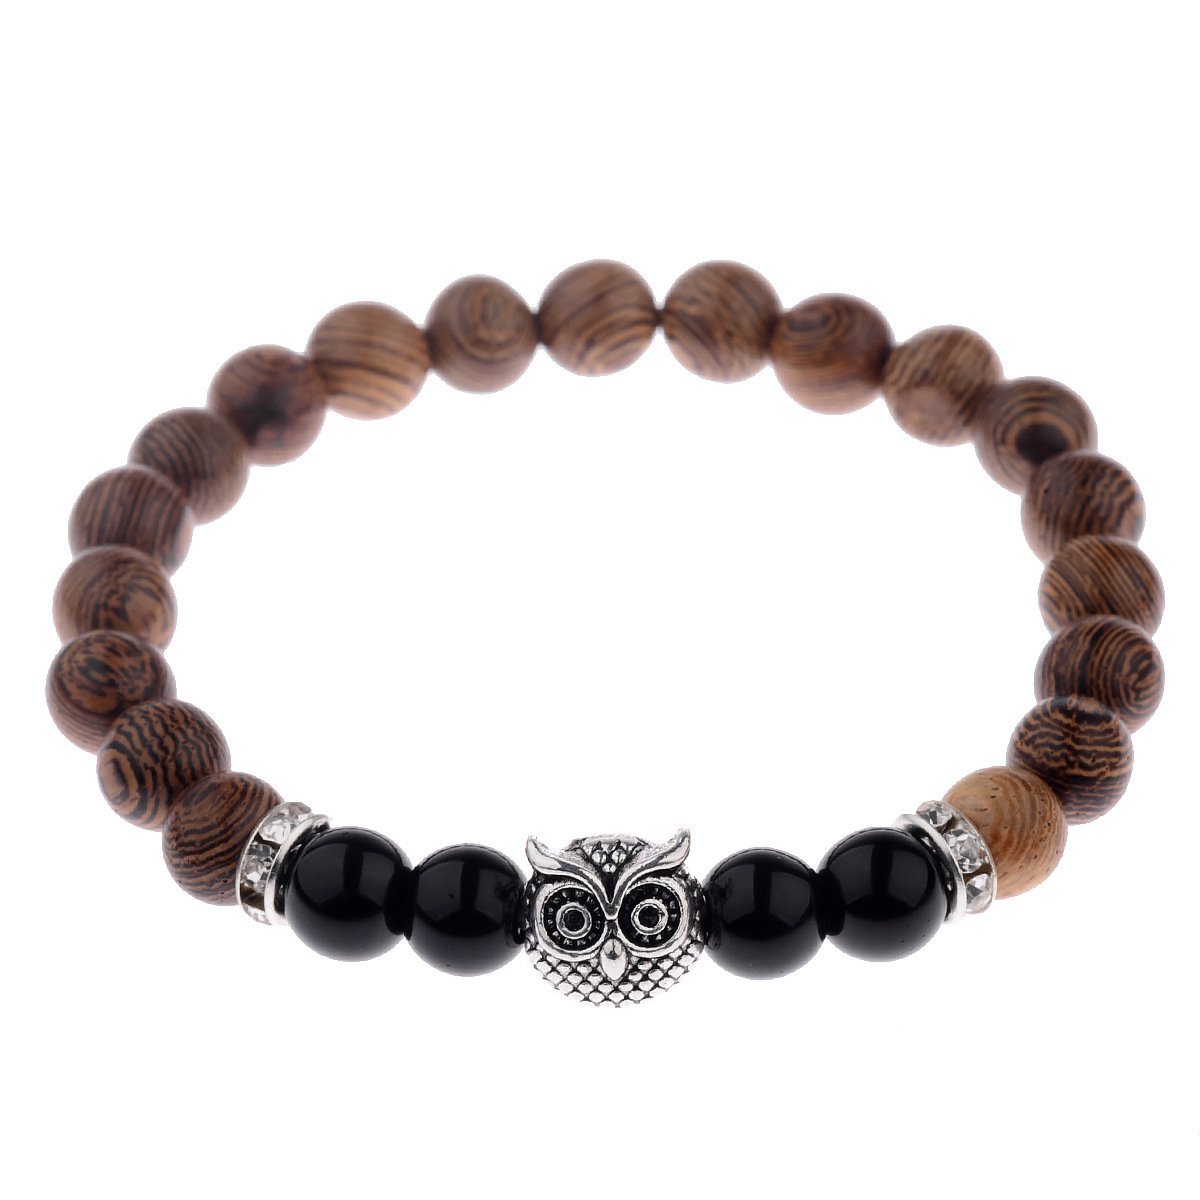 Owlsome Woodgrain Beads Bracelet - Owlsome Bracelets